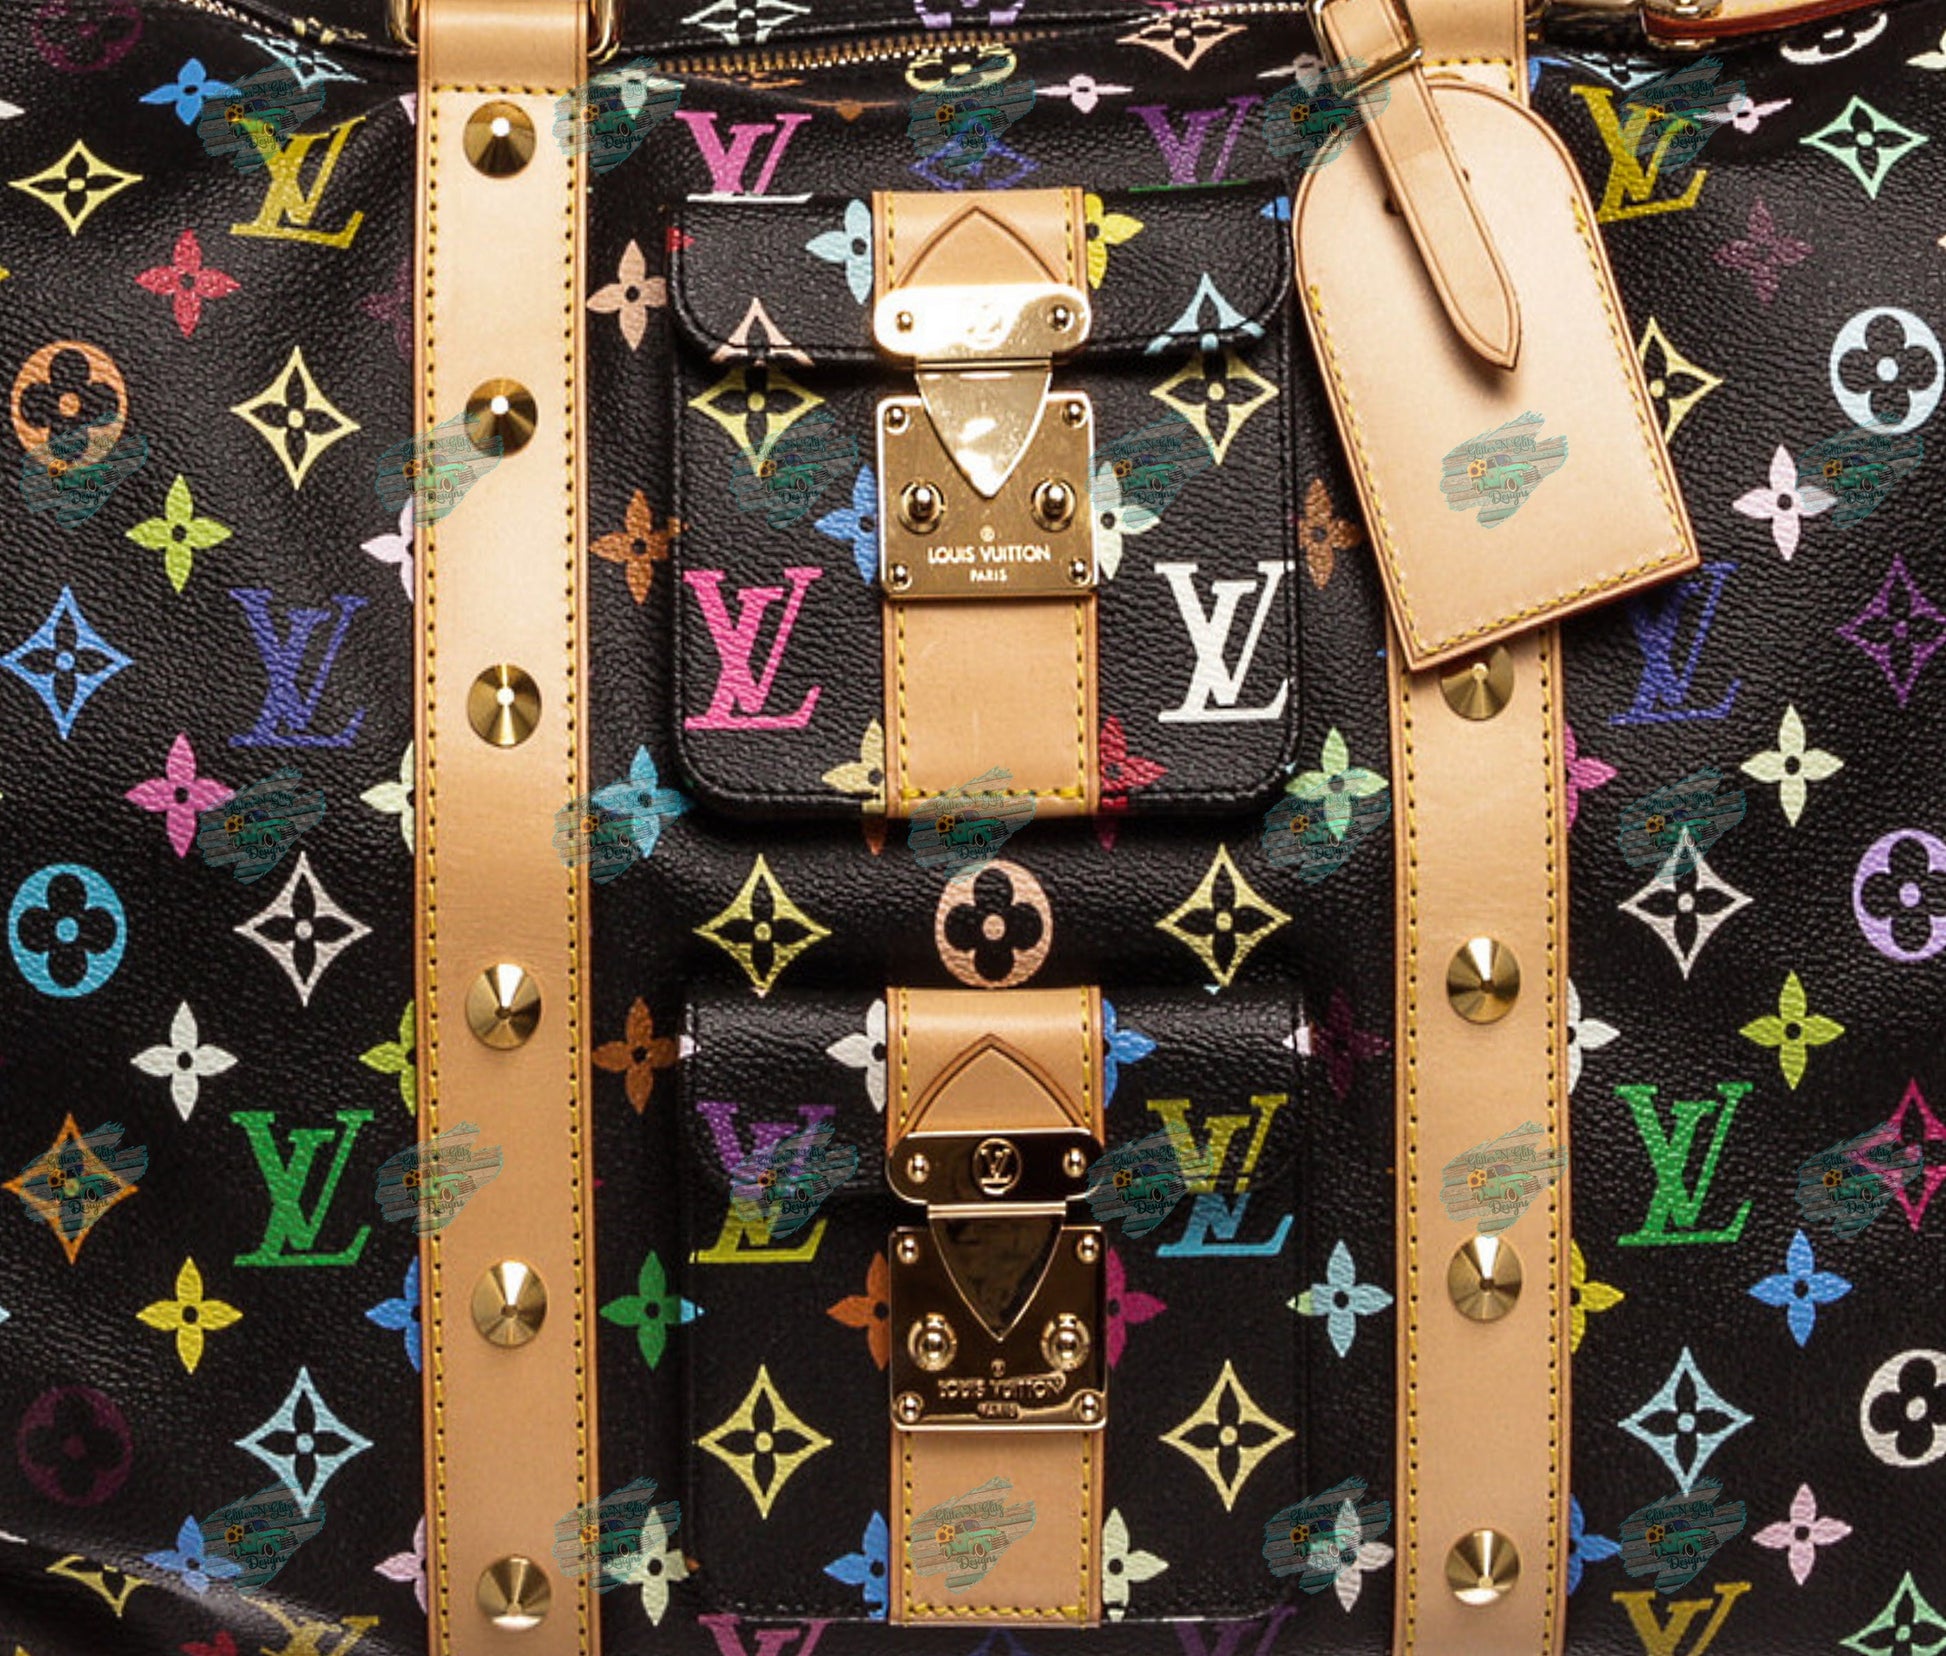 Louis Vuitton Monogram T-Shirt Tops Women Size S LV Logo Glitter From Japan